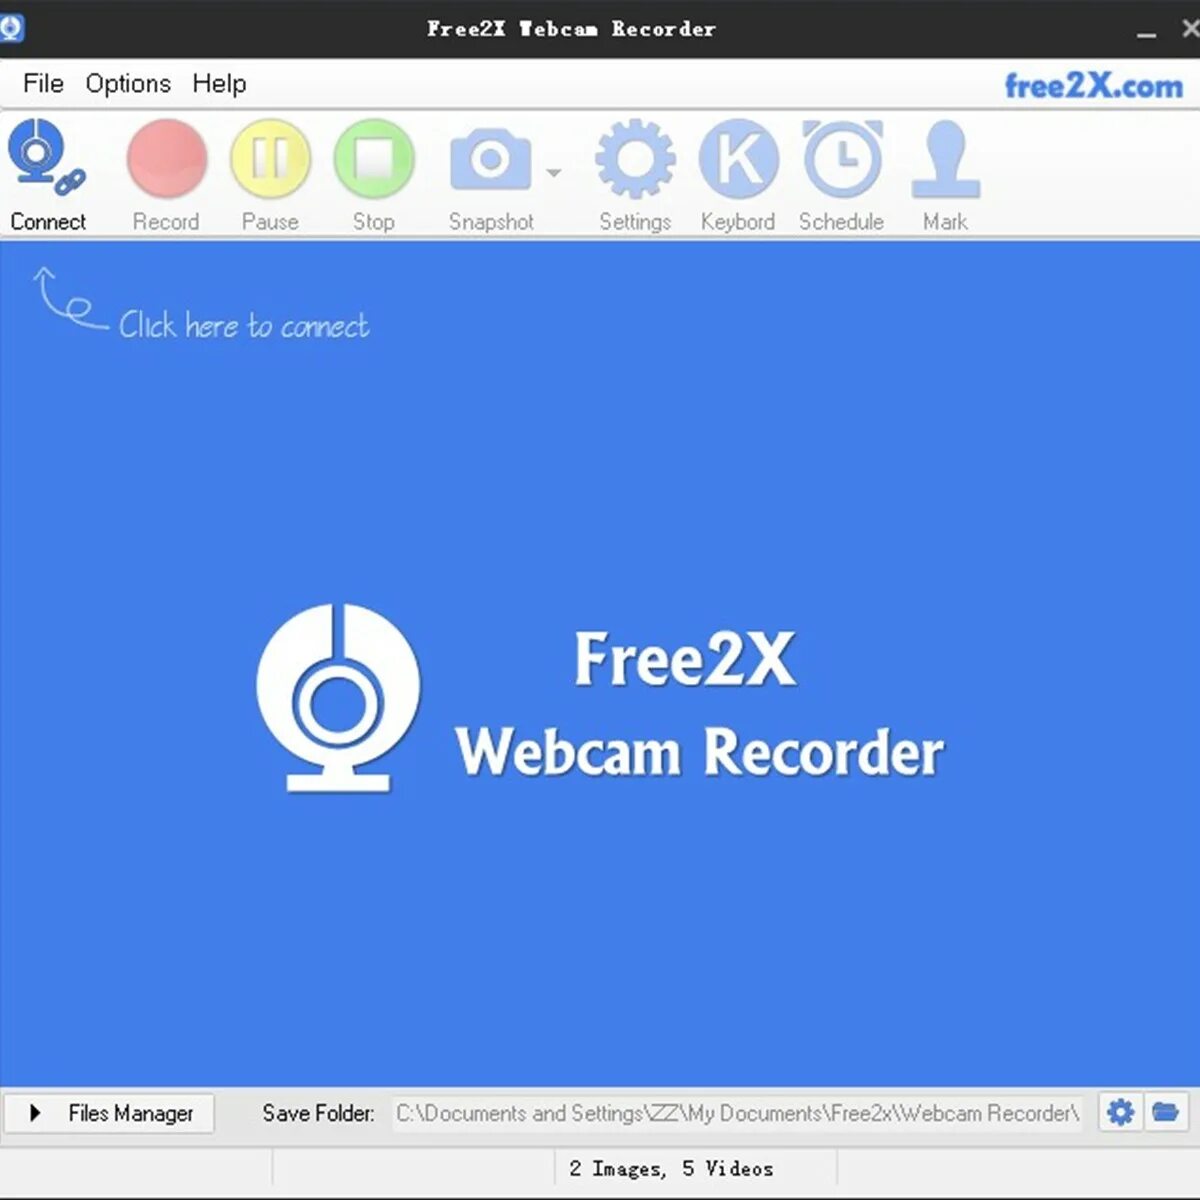 Программа видео веб камера. Webcam программа. Программа для видеозаписи с web камеры. Запись с веб камеры. Запись с веб камеры программы записью.